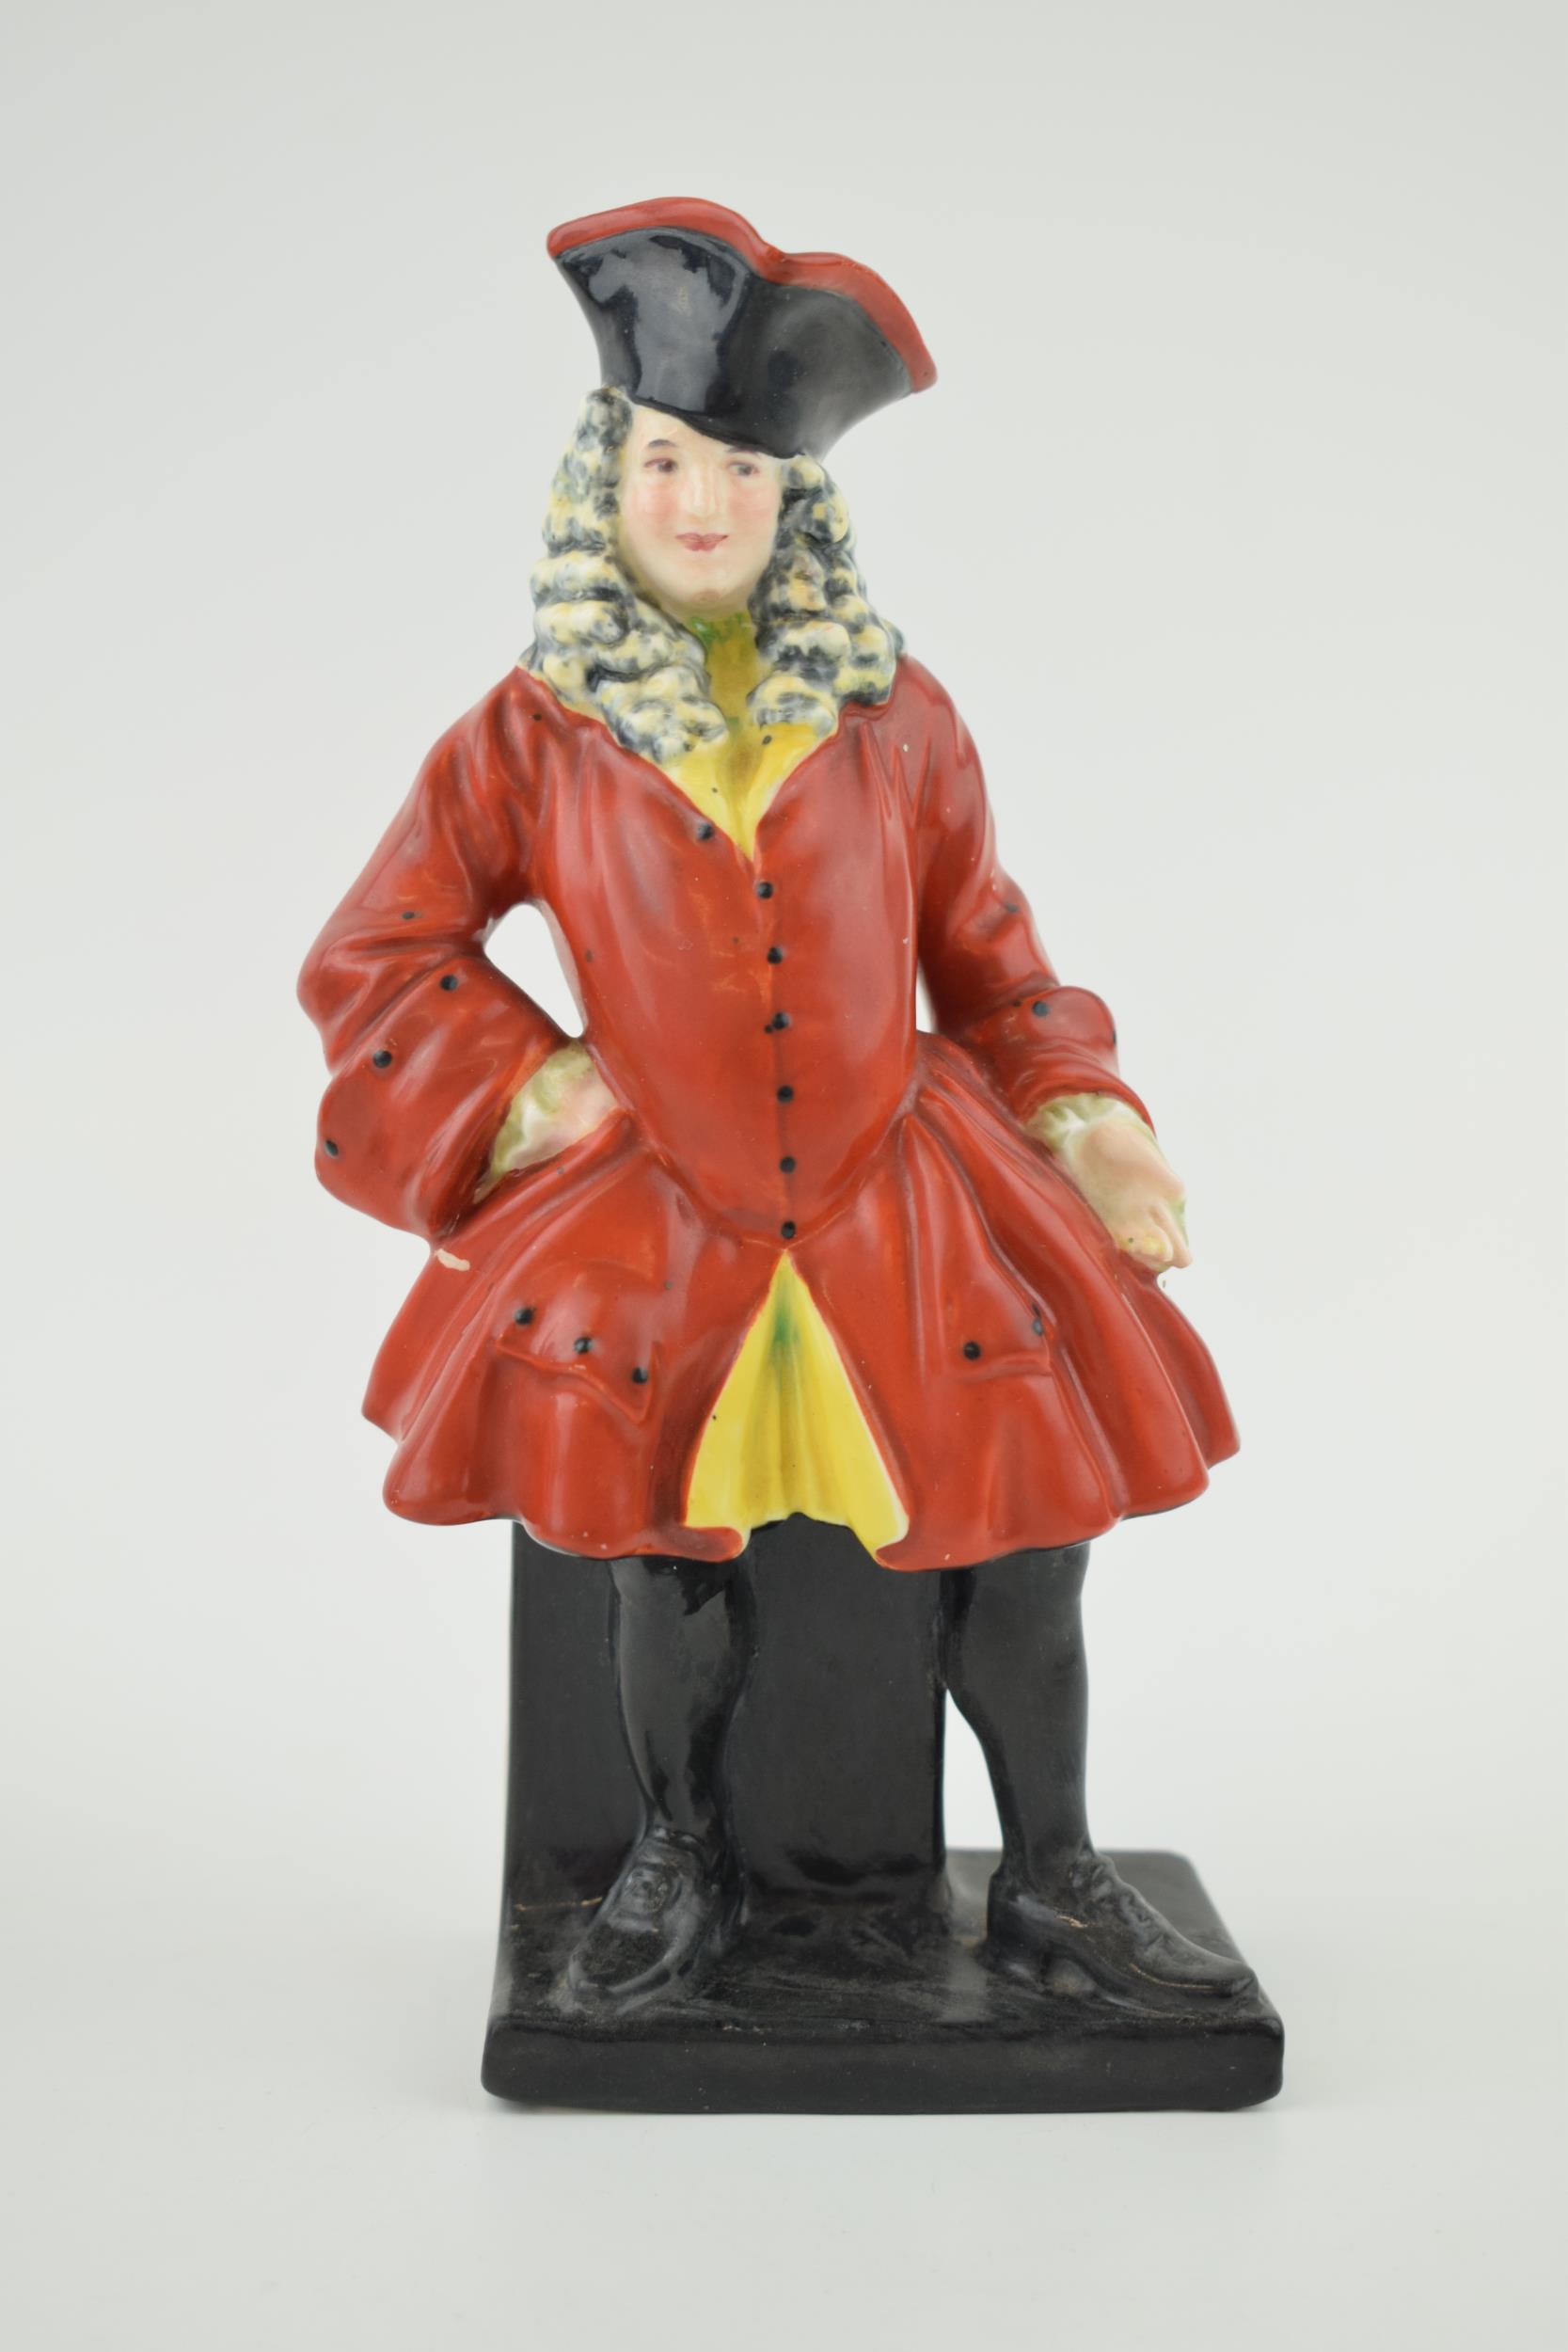 Royal Doulton figure Capt Macheath Beggar's Opera HN464, written marks to base, 18.5cm tall.